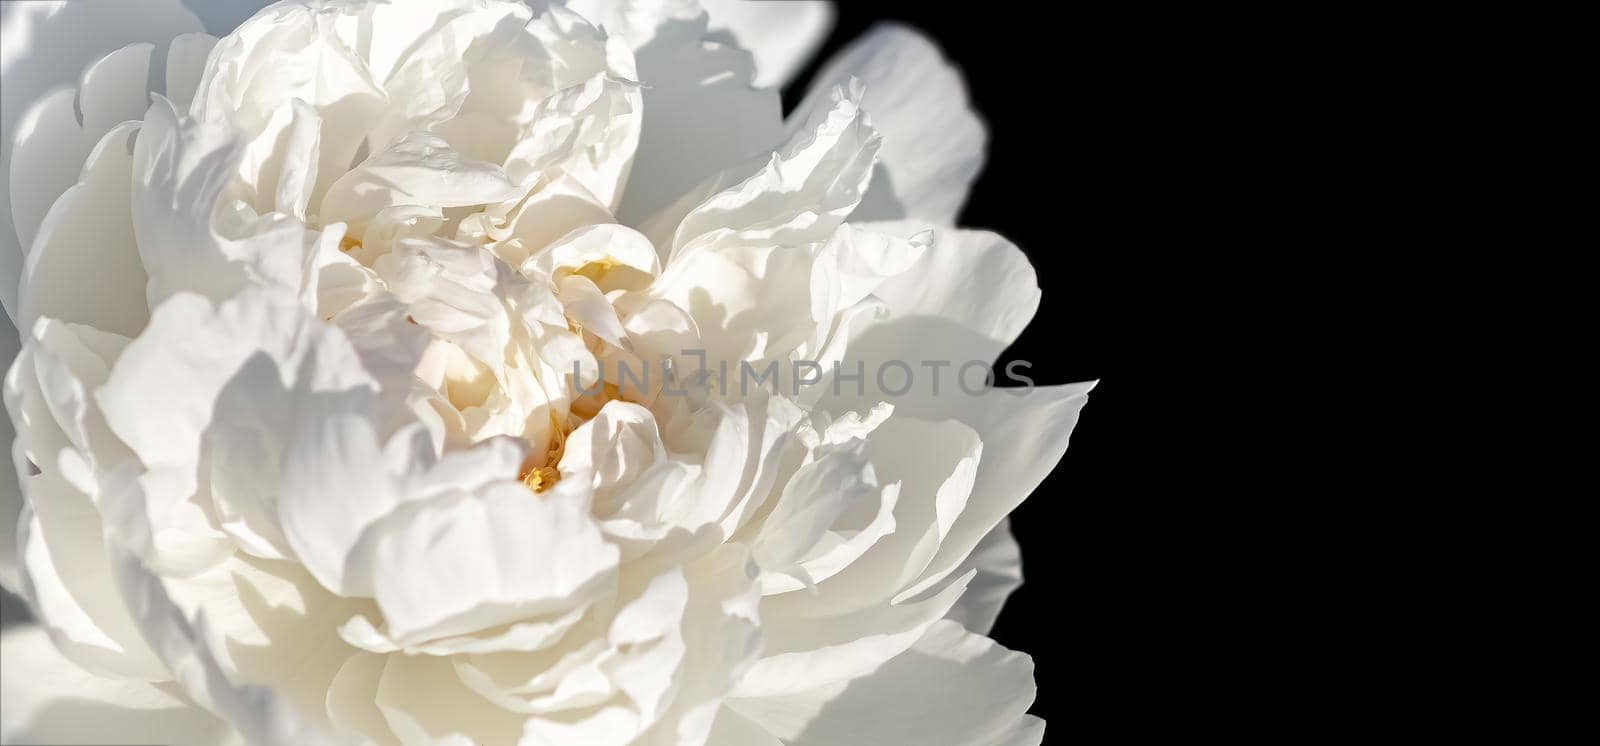 Peonies in sunlight. Soft focus image of blooming white peonies in sun light.